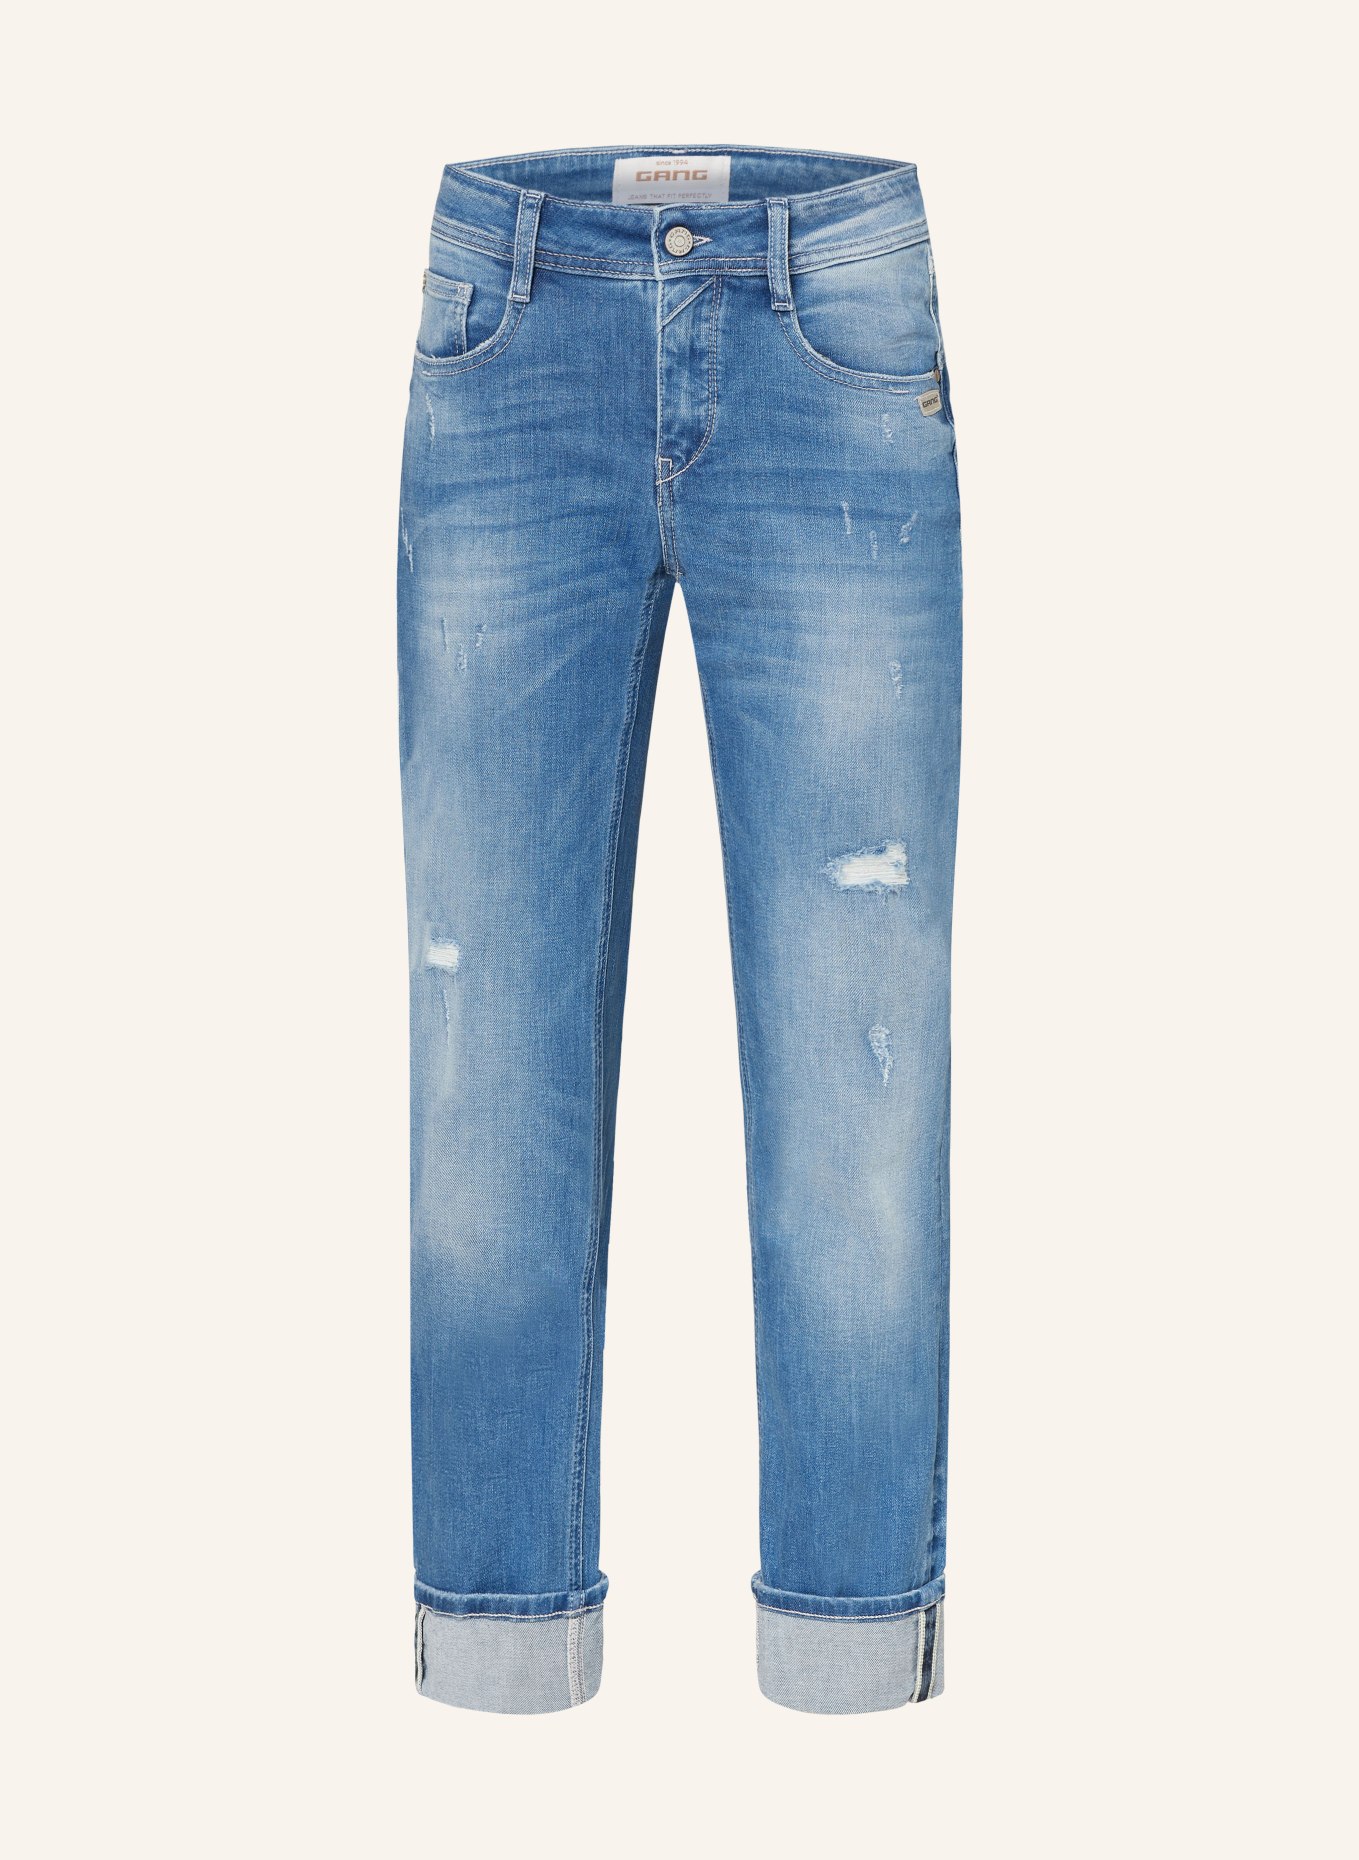 GANG Jeans AMELIE, Farbe: 7699 lovly destoxed (Bild 1)